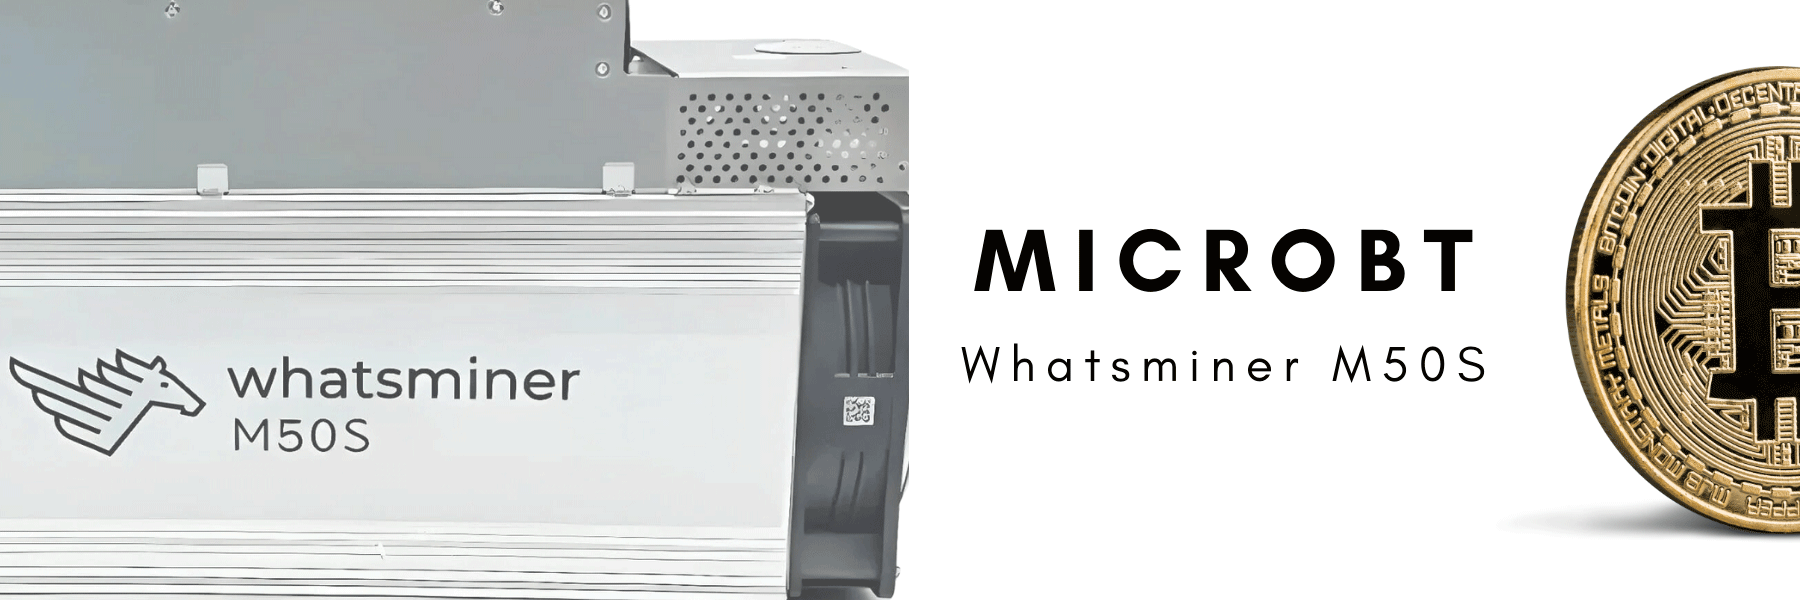 Microbt whatsminer m50